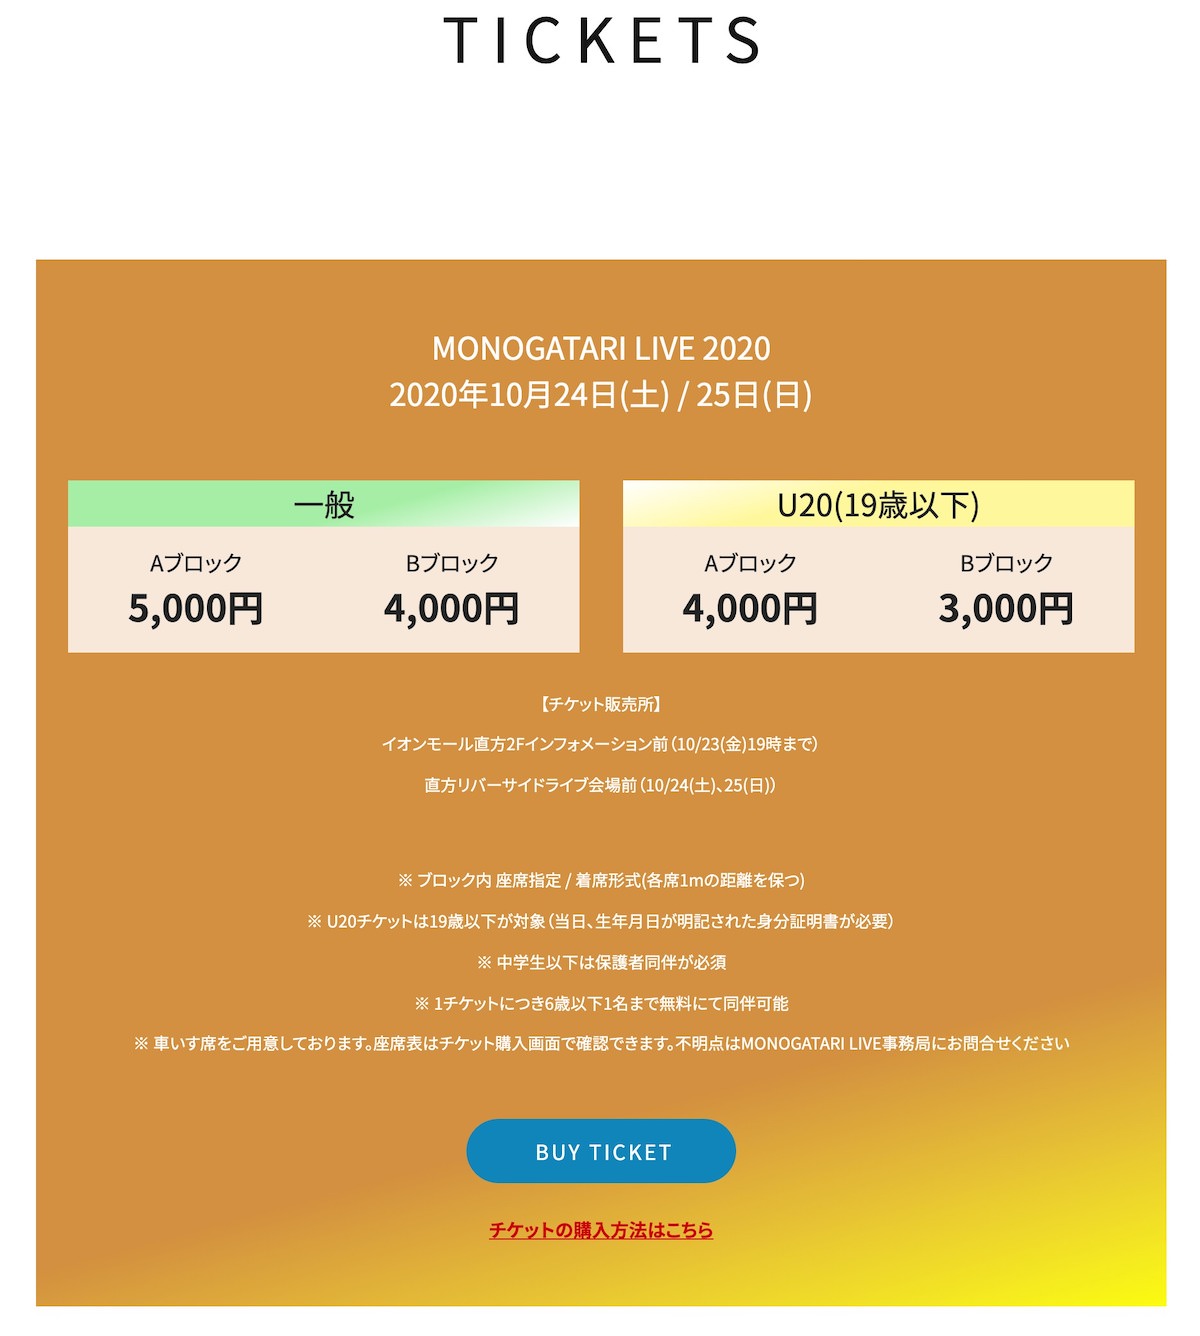 「MONOGATARI LIVE 2020」のチケット情報